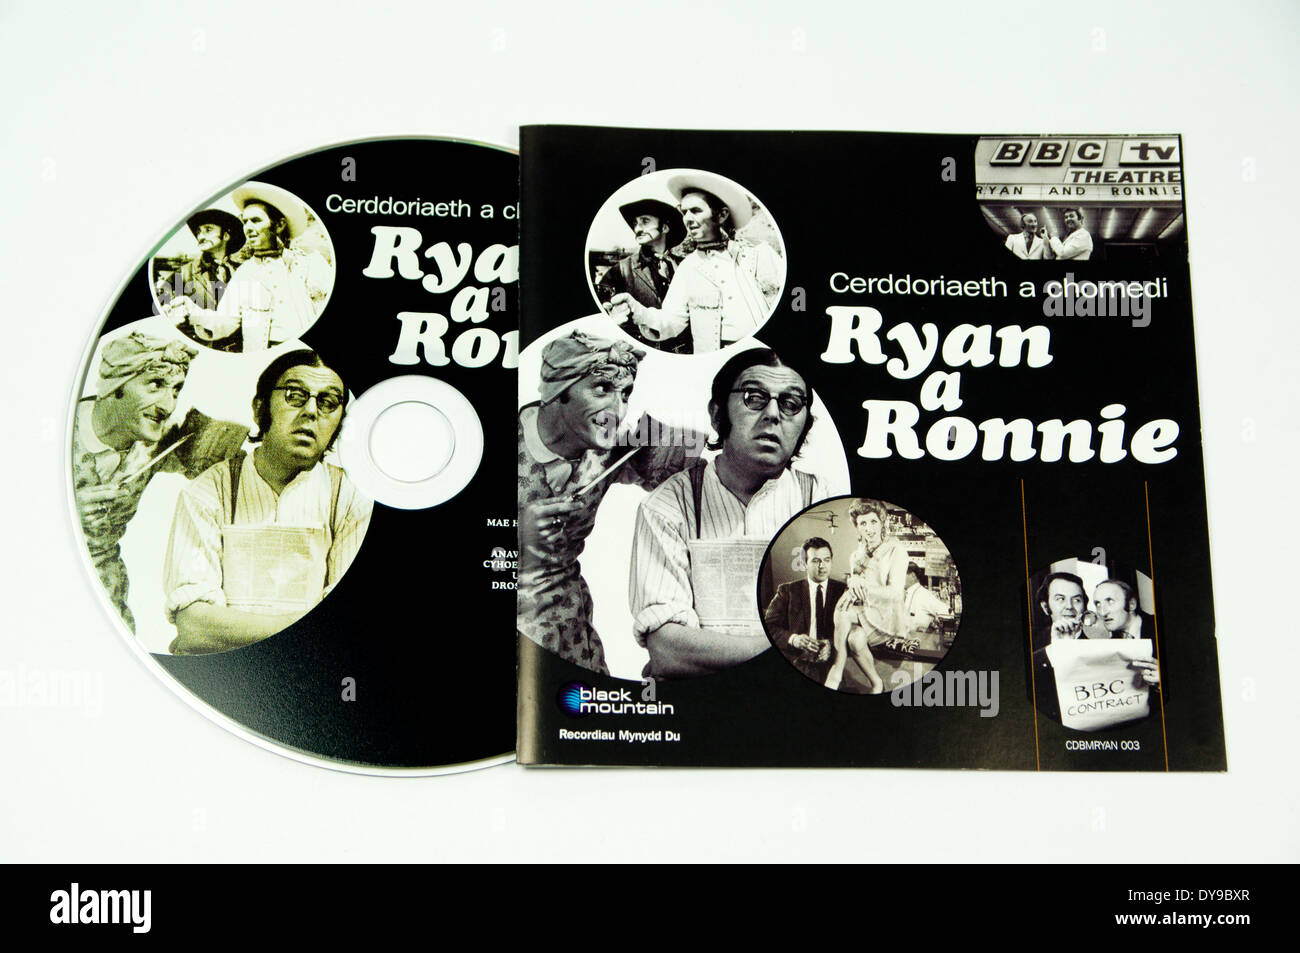 Ryan e Ronnie Welsh commedia duo dvd Foto Stock